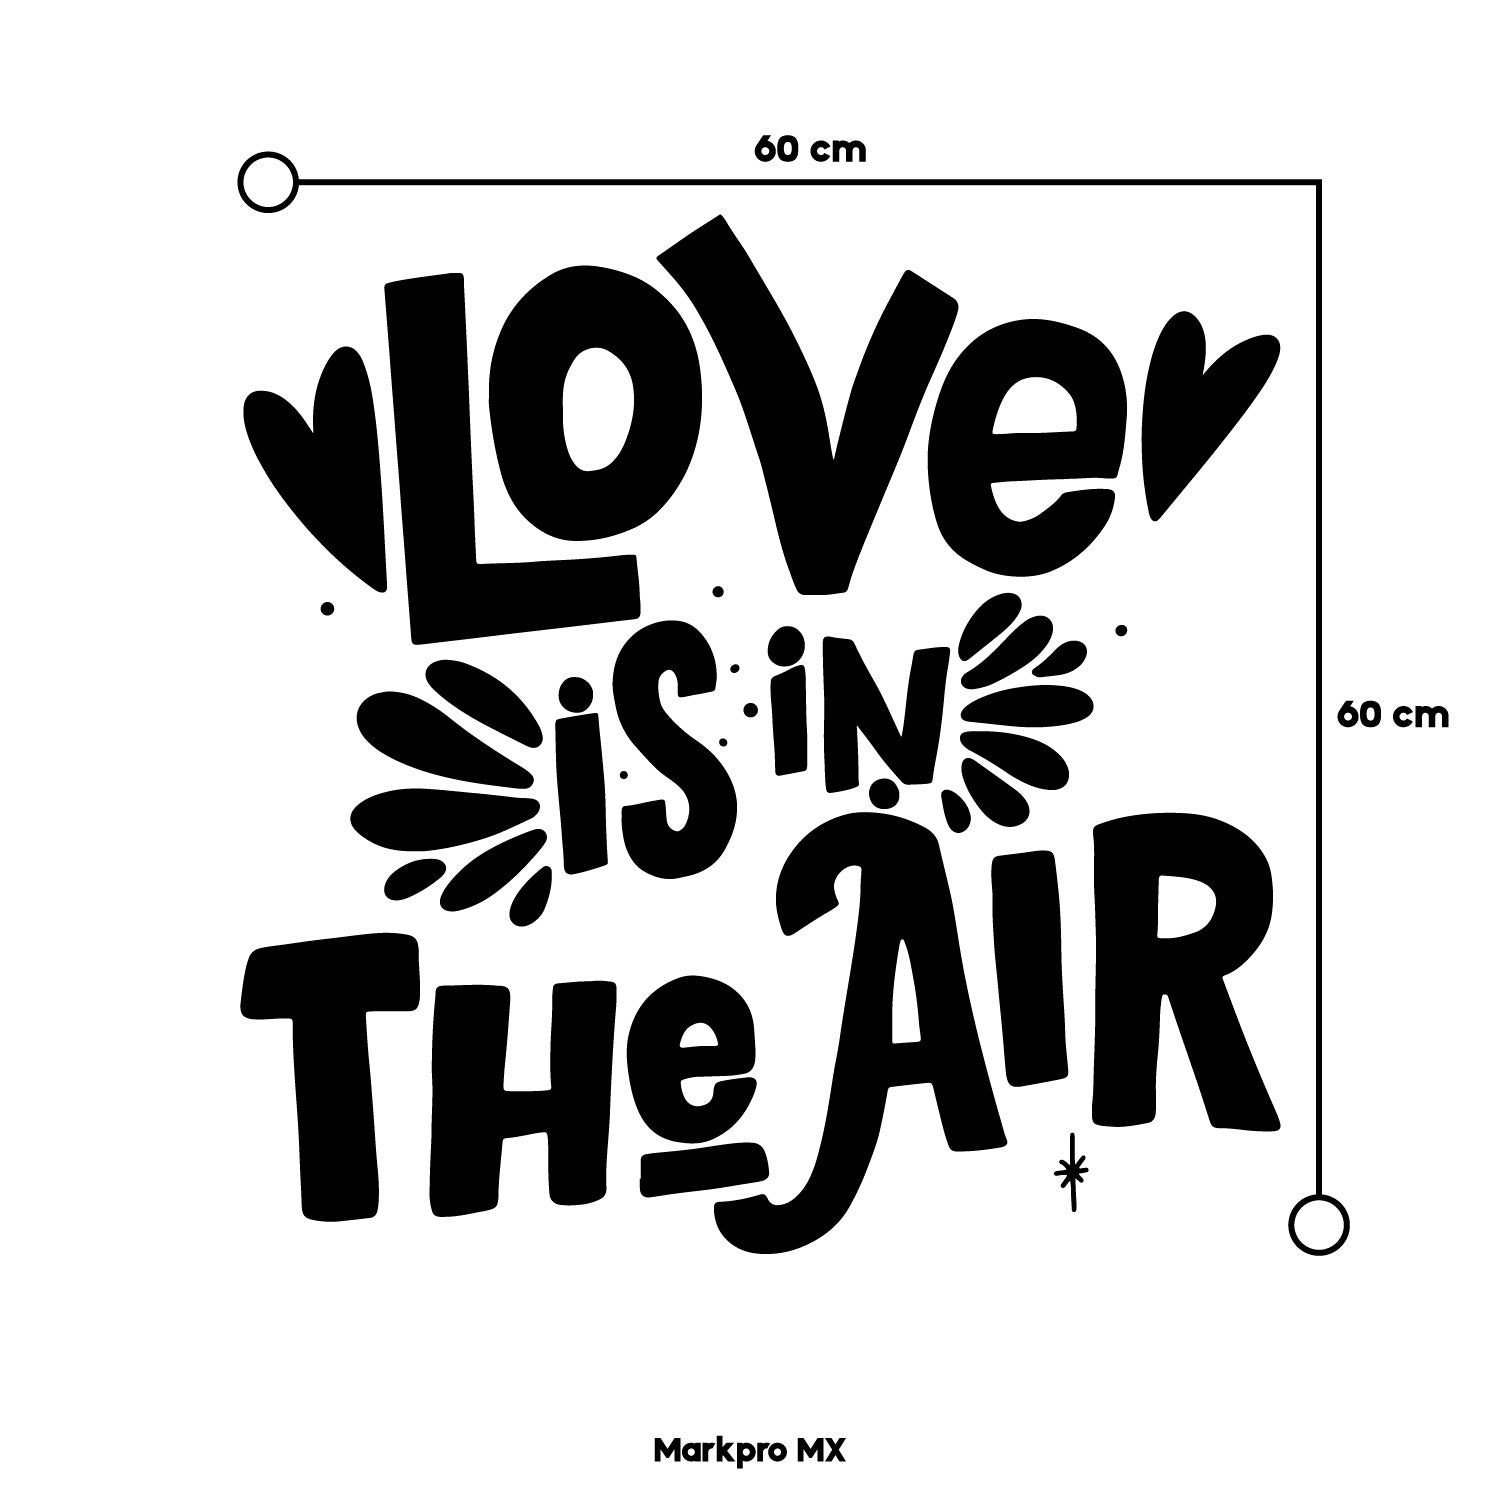 VINIL DECORATIVO LOVE IS IN THE AIR 60 X 60 CM